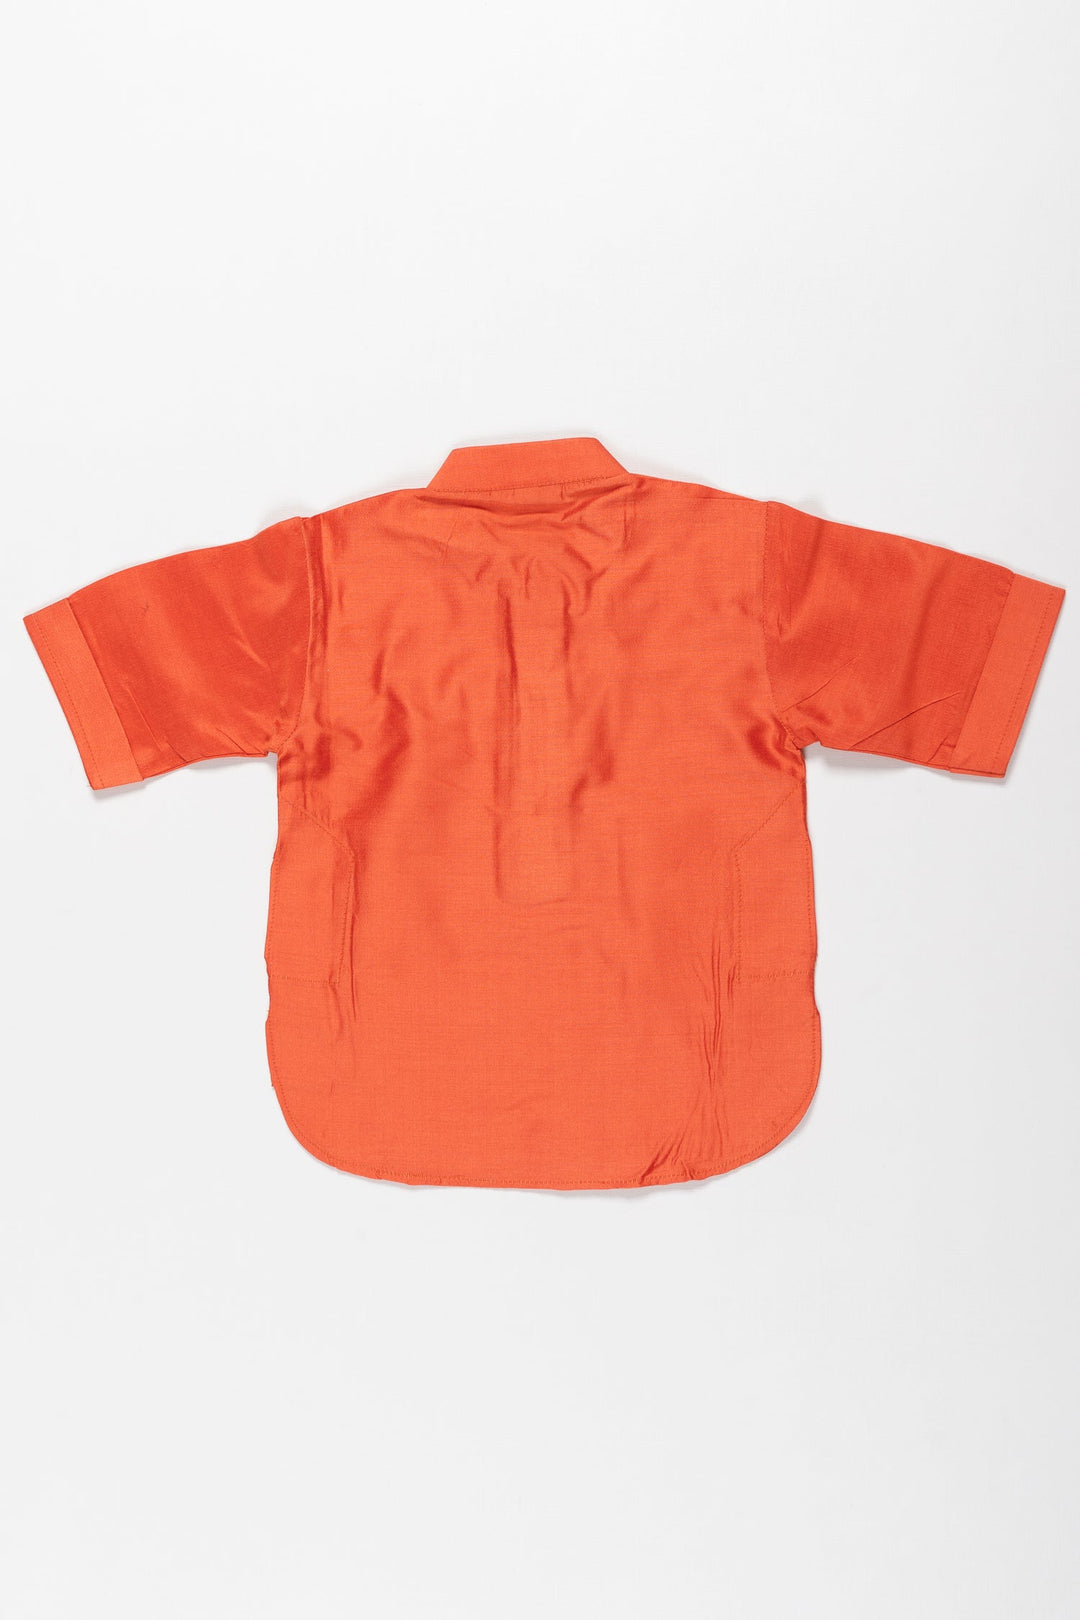 The Nesavu Boys Kurtha Shirt Boys Traditional Kurta Shirt in Rustic Orange - Elegance Meets Comfort Nesavu Traditional Boys Kurta Shirt | Rustic Orange Comfort Wear | The Nesavu